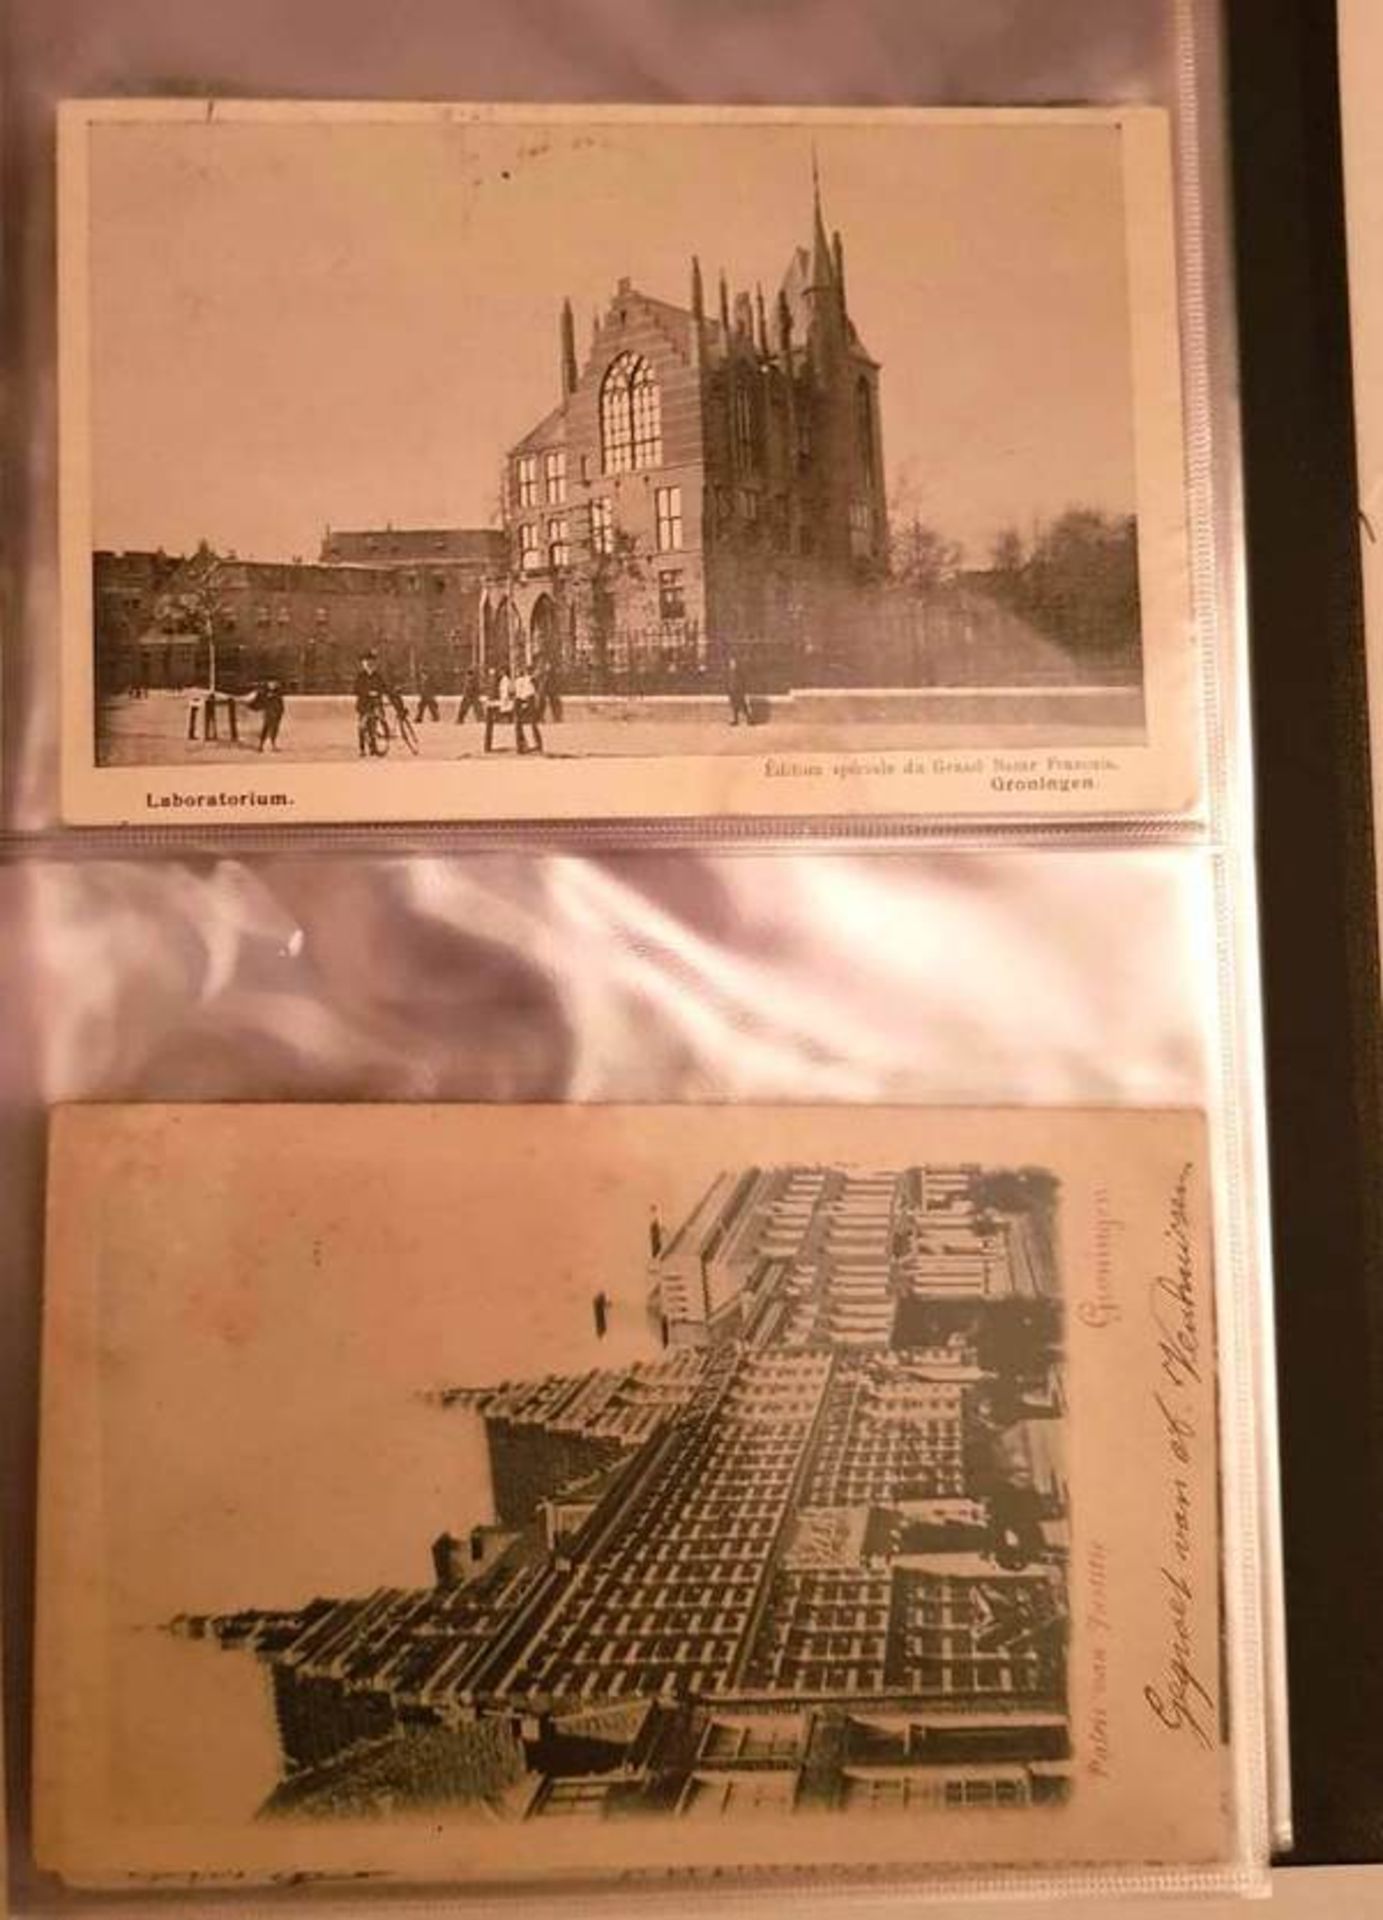 (Curiosa) AnsichtkaartenLot anischtkaarten mbt de stad Groningen Periode 1900-1920. In - Bild 7 aus 9